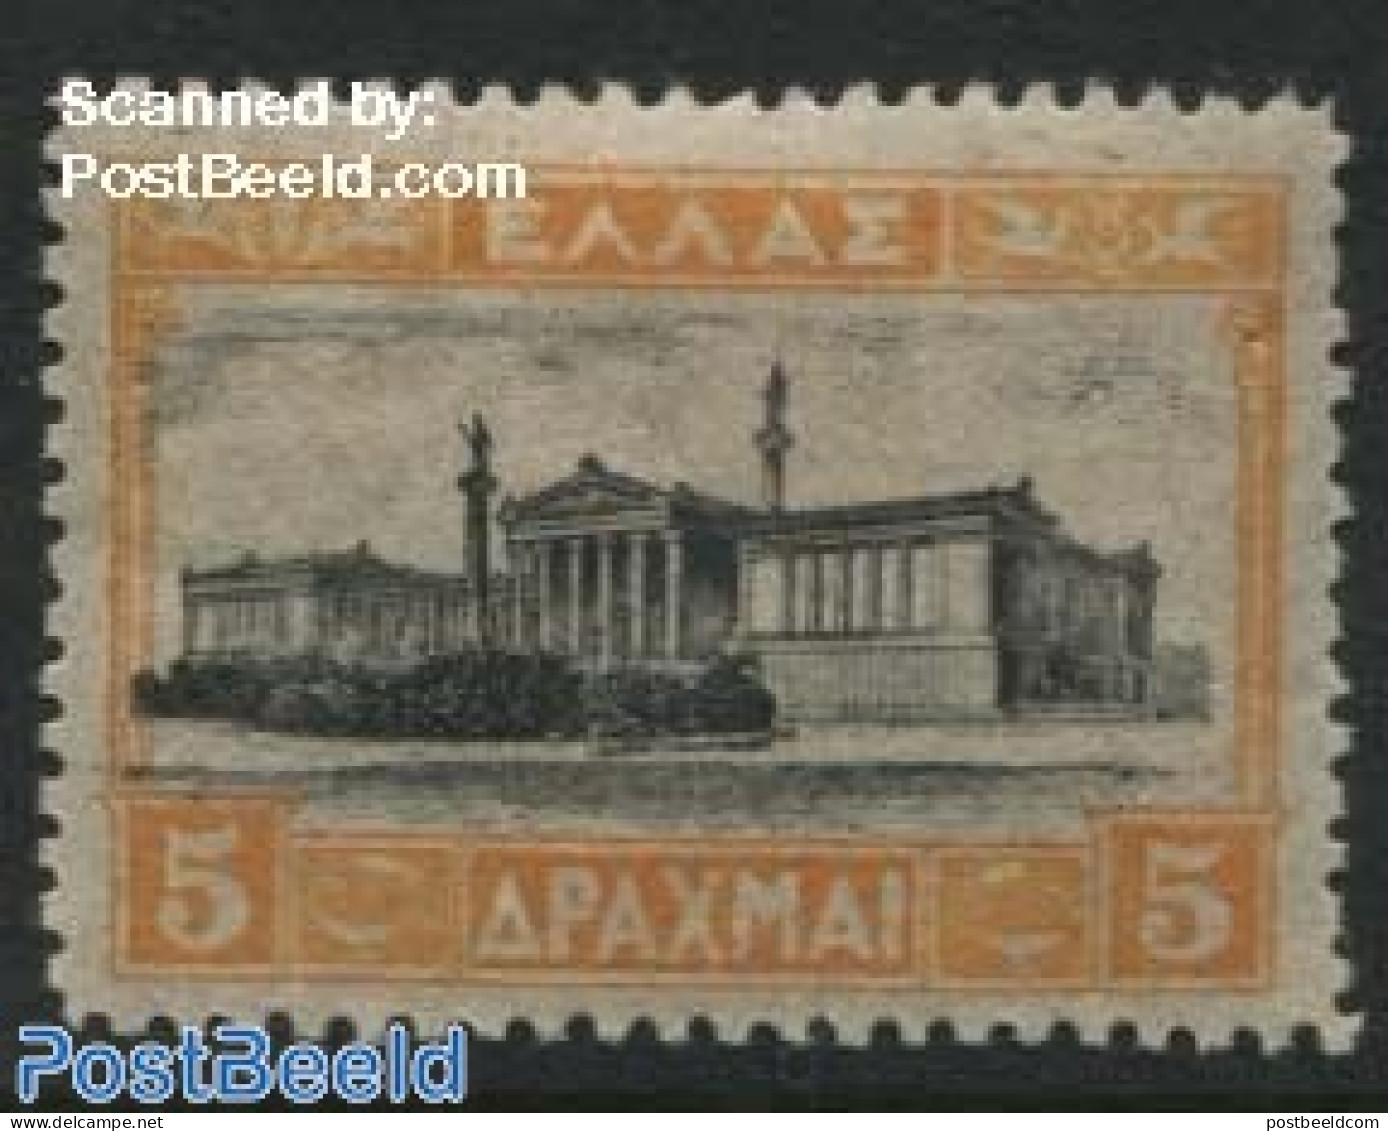 Greece 1927 5Dr, Stamp Out Of Set, Unused (hinged) - Ongebruikt